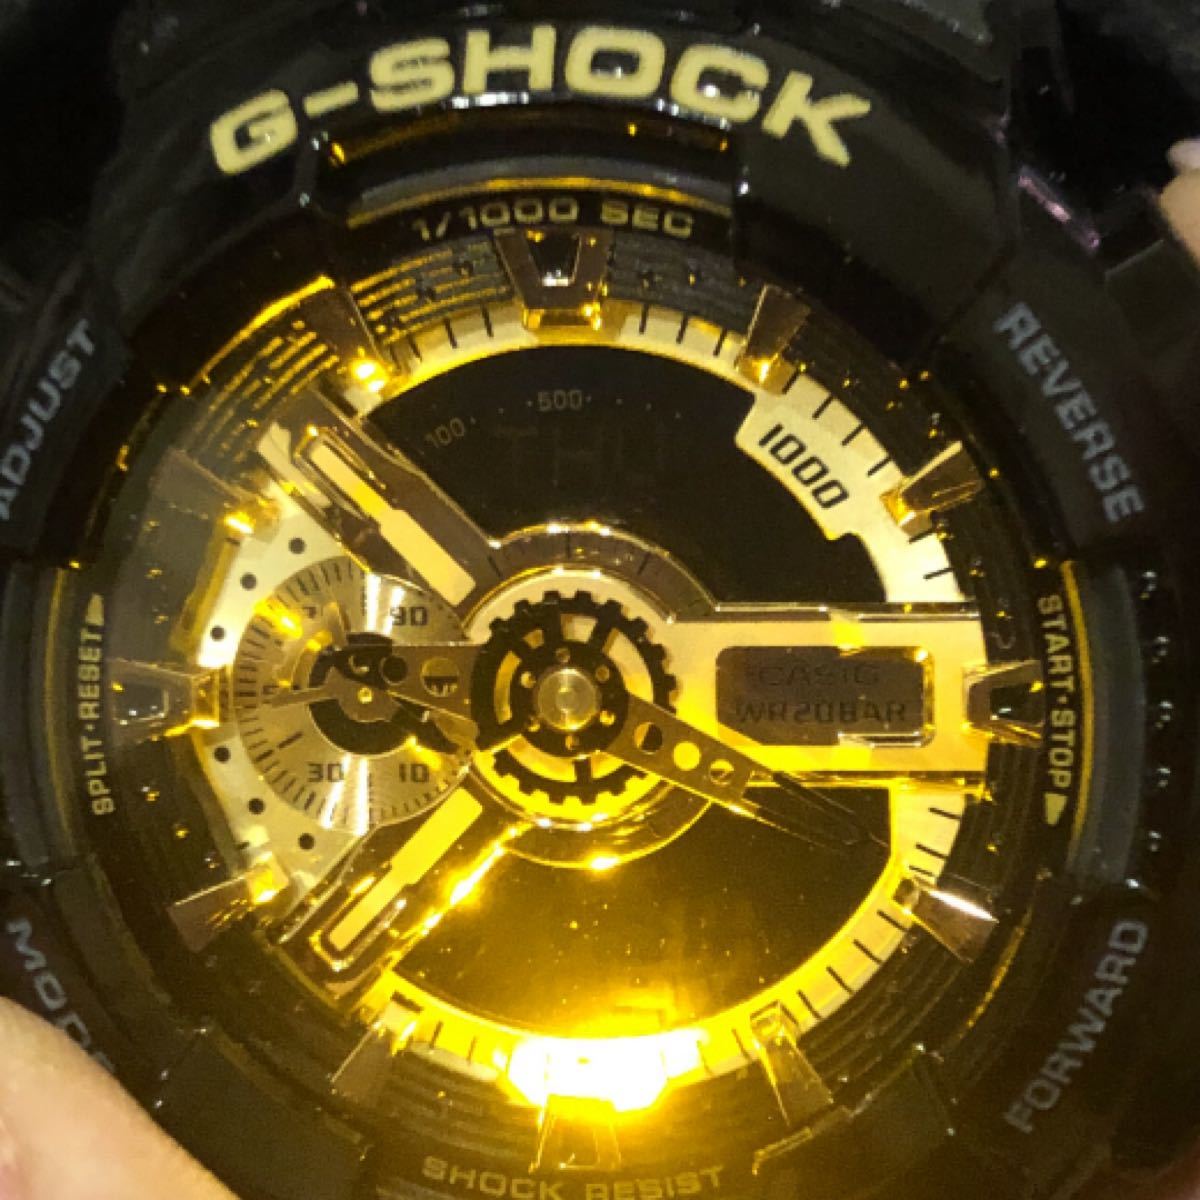 ☆ 新品未使用品 CASIO G-SHOCK GA-110GB-1 ☆ GA-110 Series GOLD